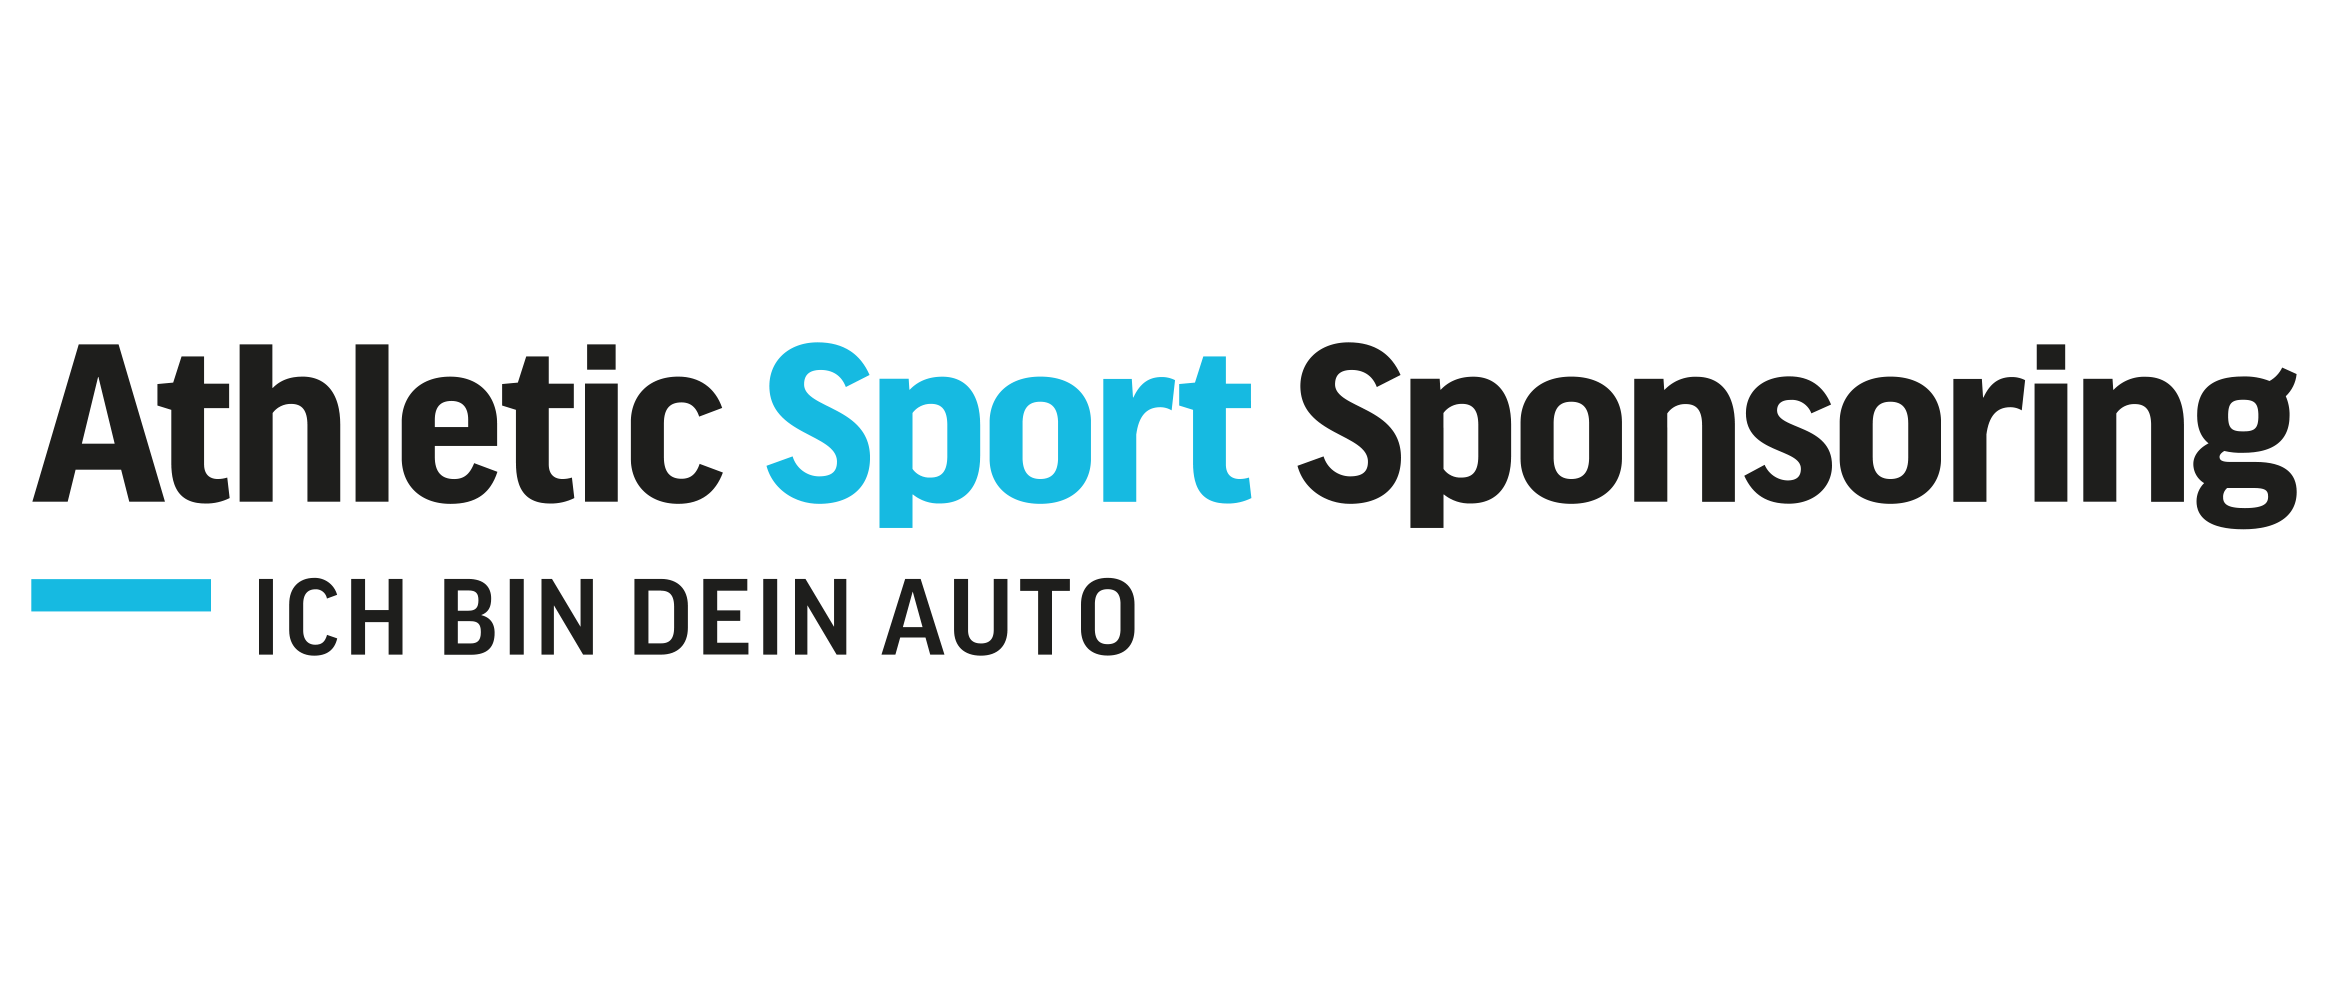 Athletic Sport Sponsoring - ichbindeinauto.de